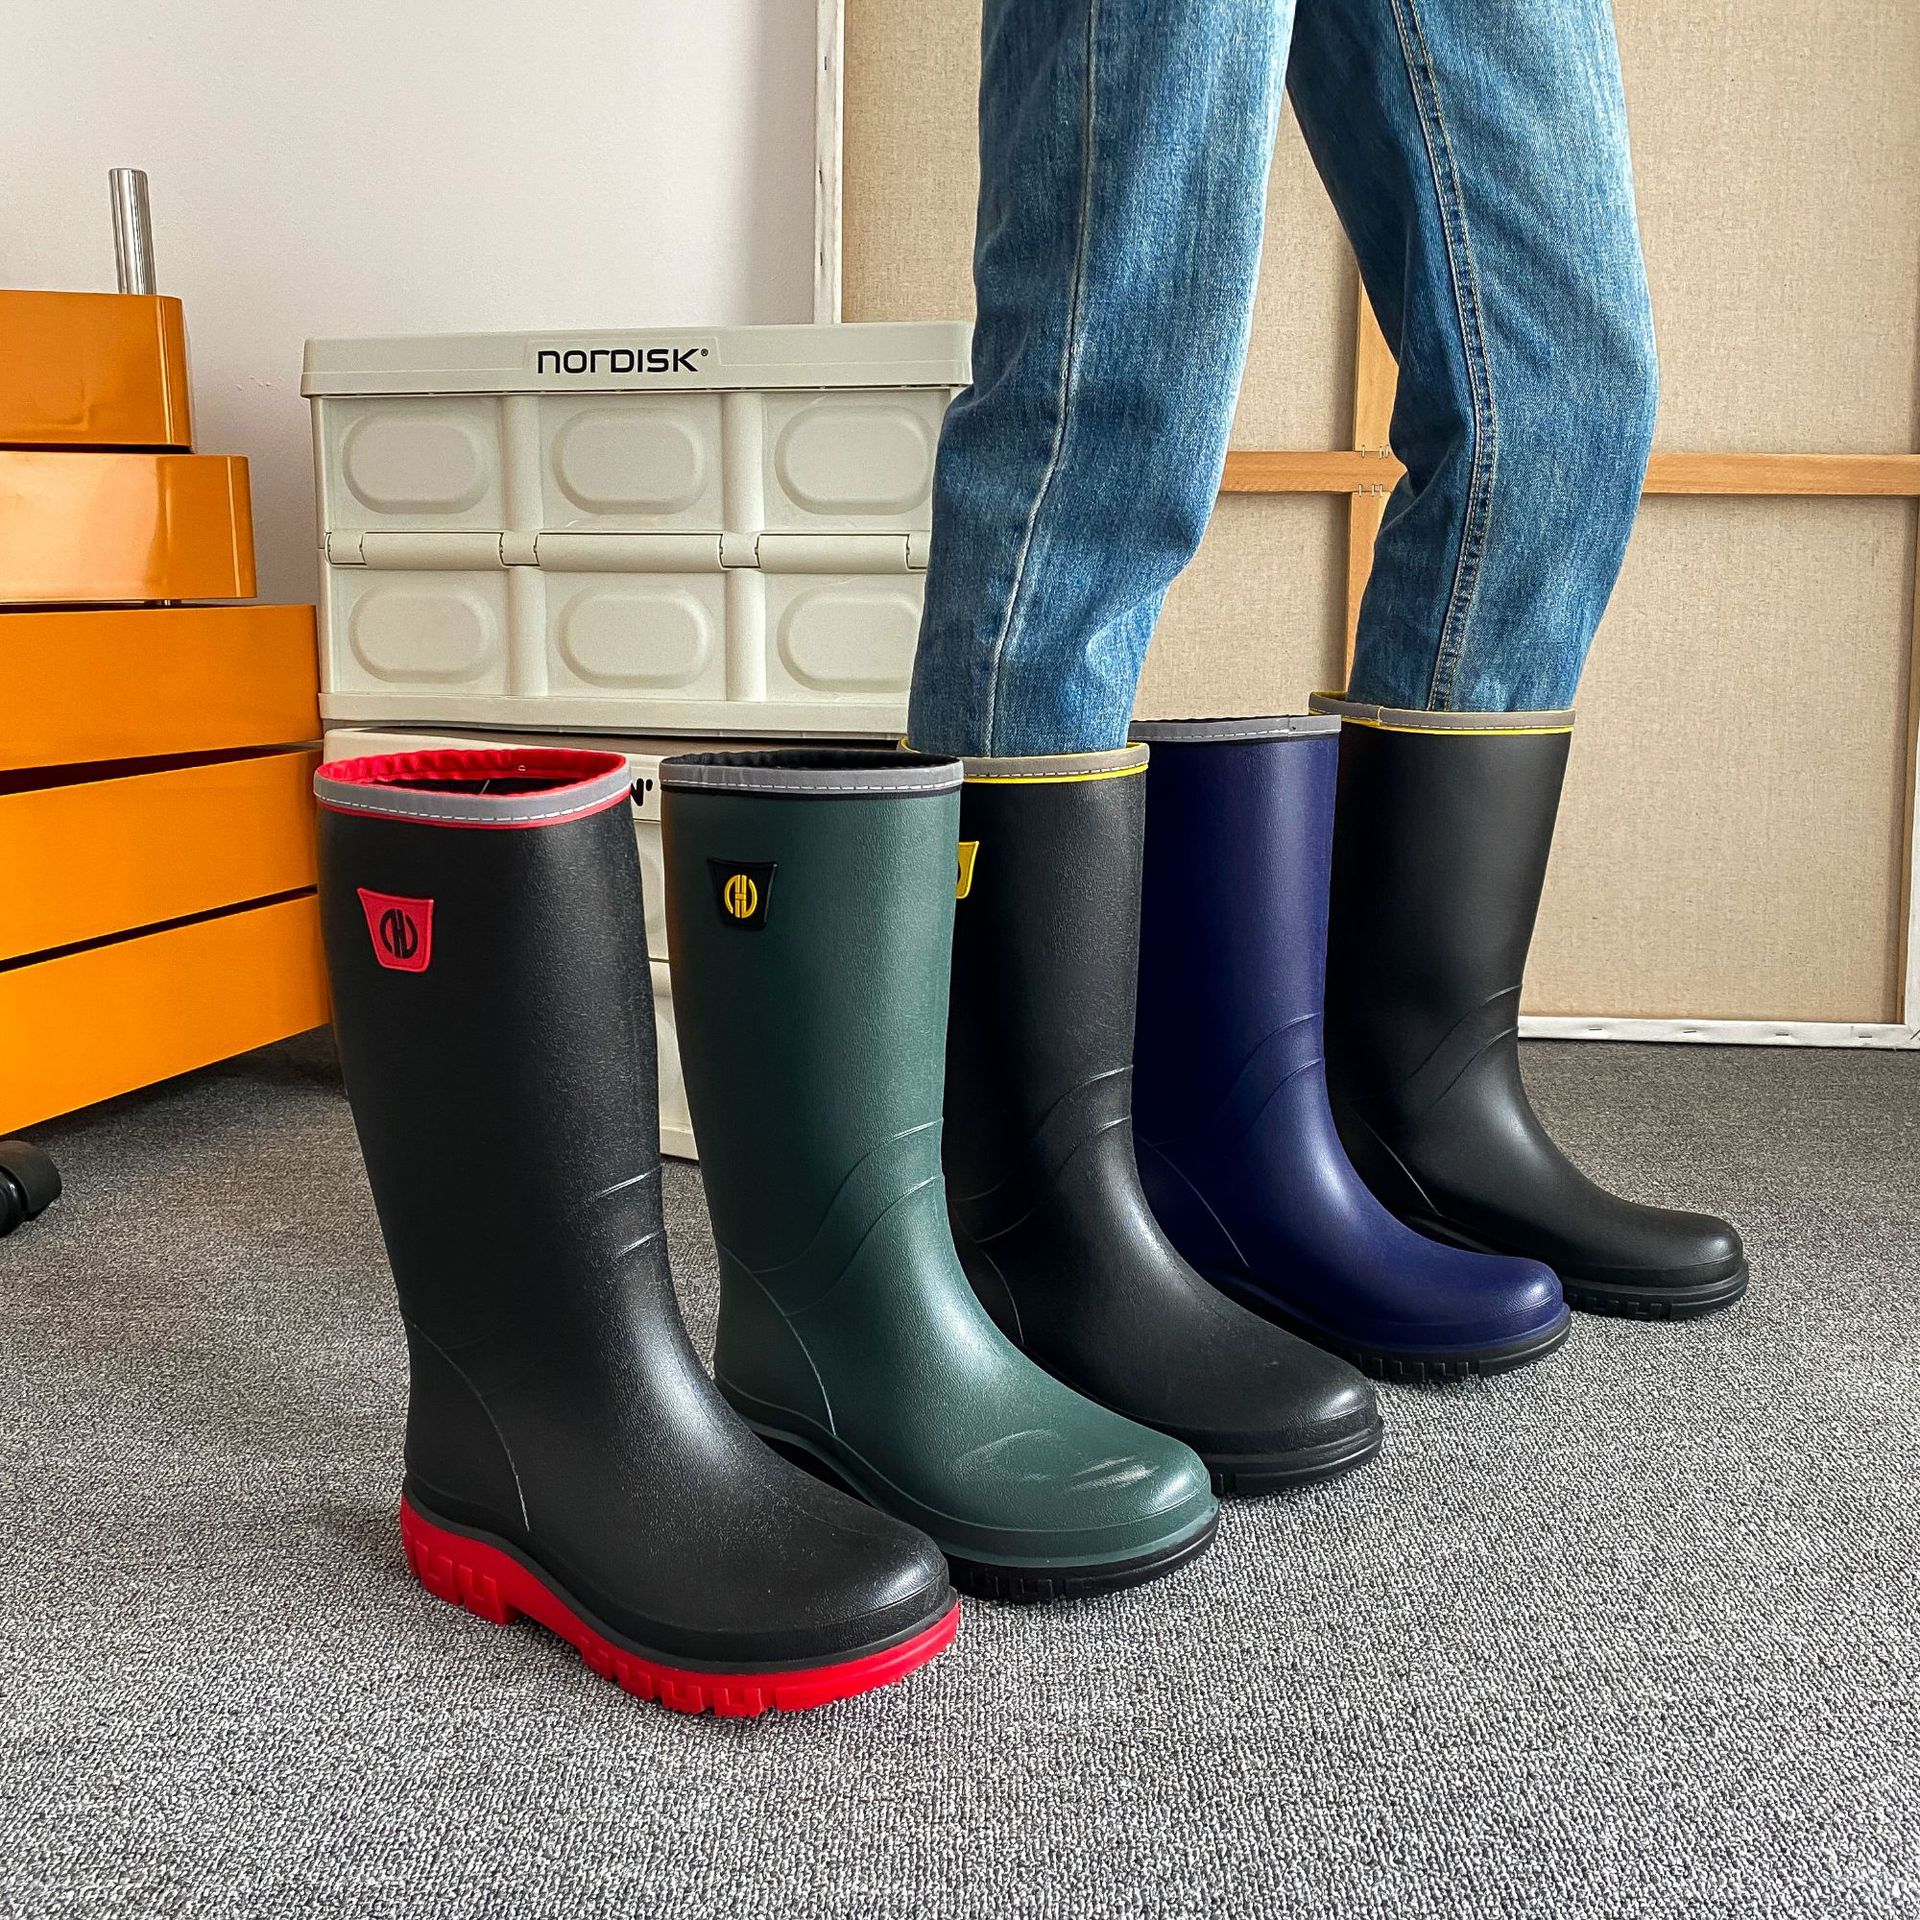 Men High Top Rain Boots Wear Resistant Waterproof Non Slip Rain